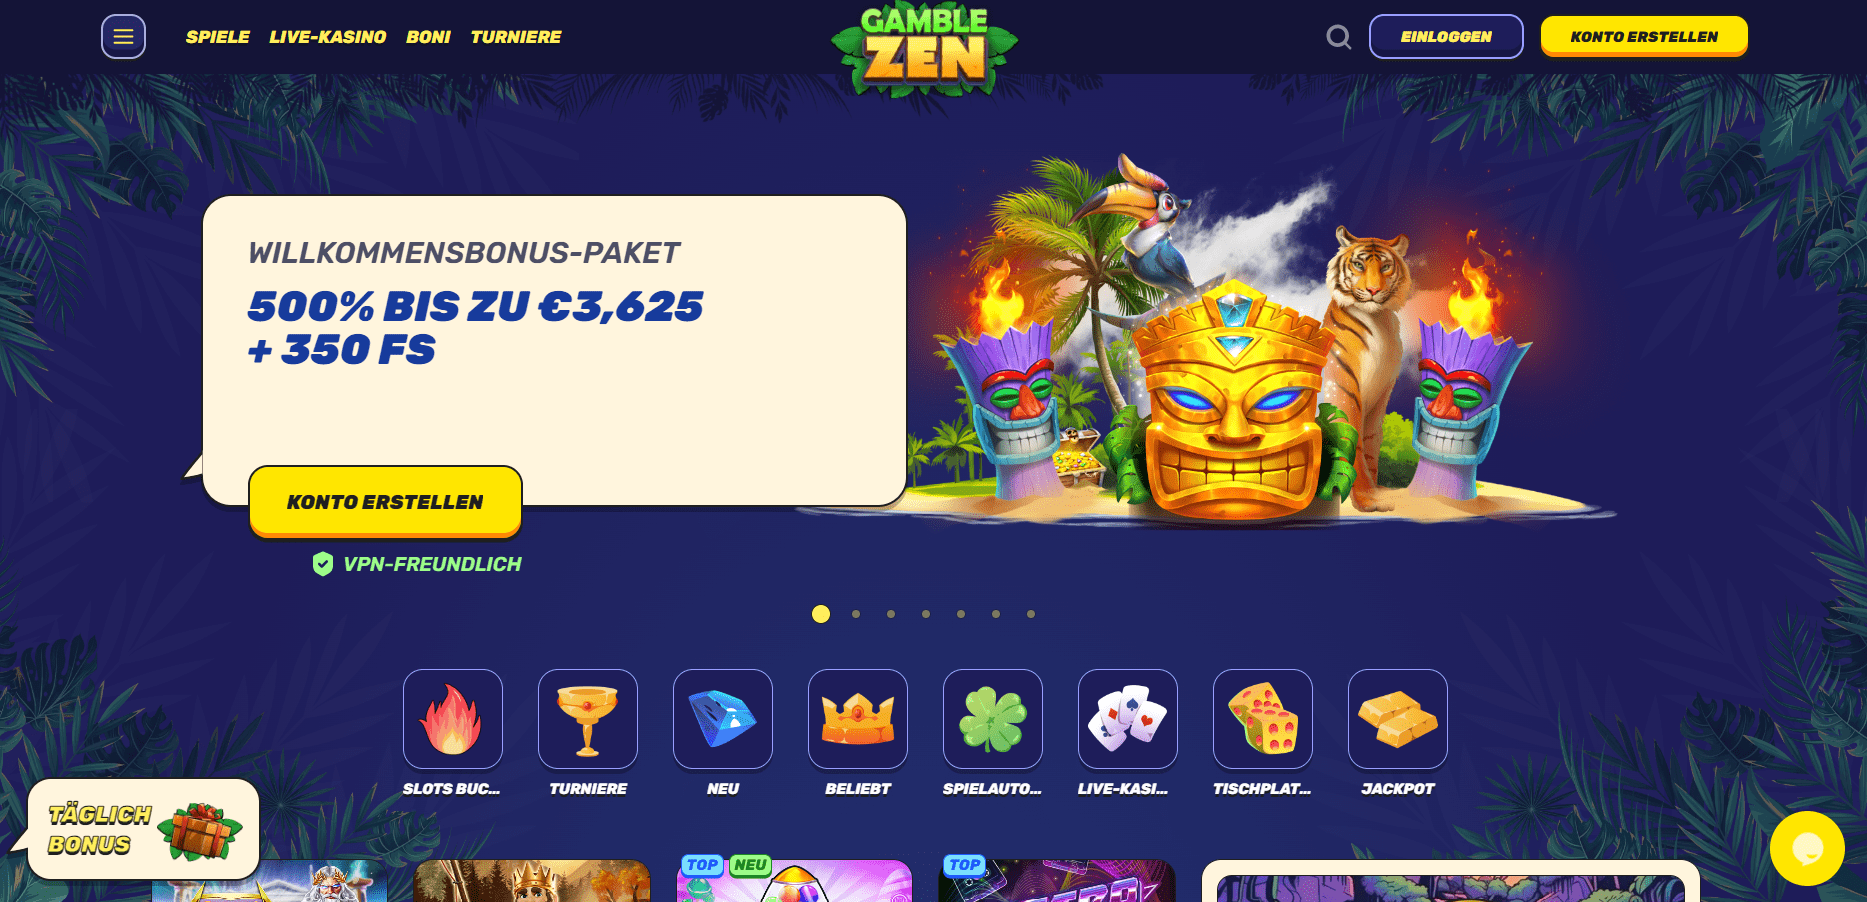 Gamblezen Casino Homepage